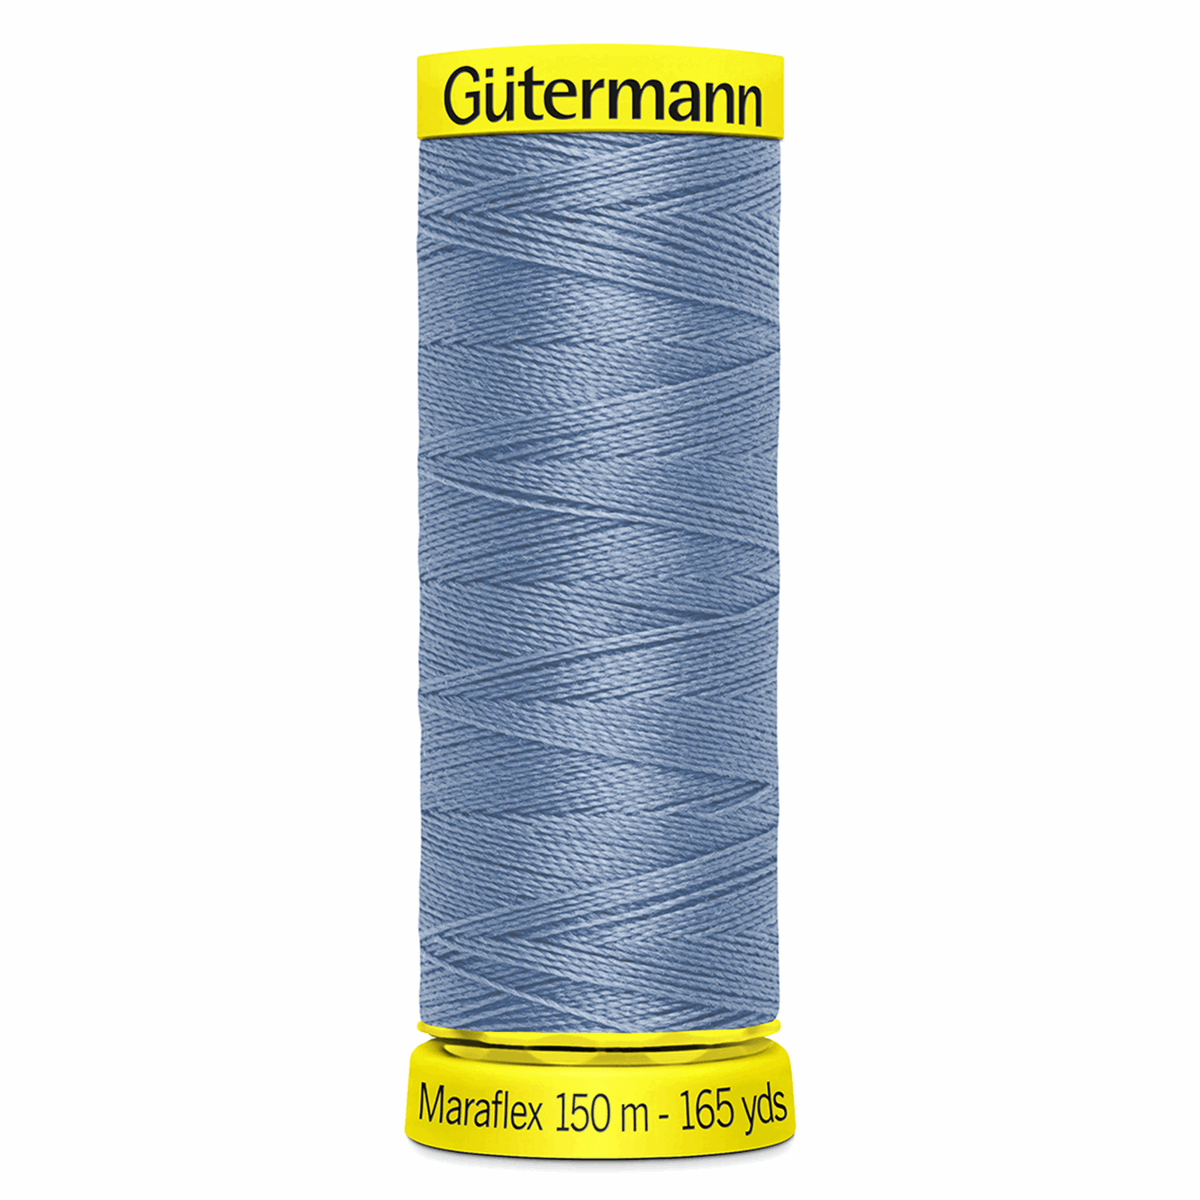 Gutermann Maraflex Elastic Sewing Thread 150m China Blue 143